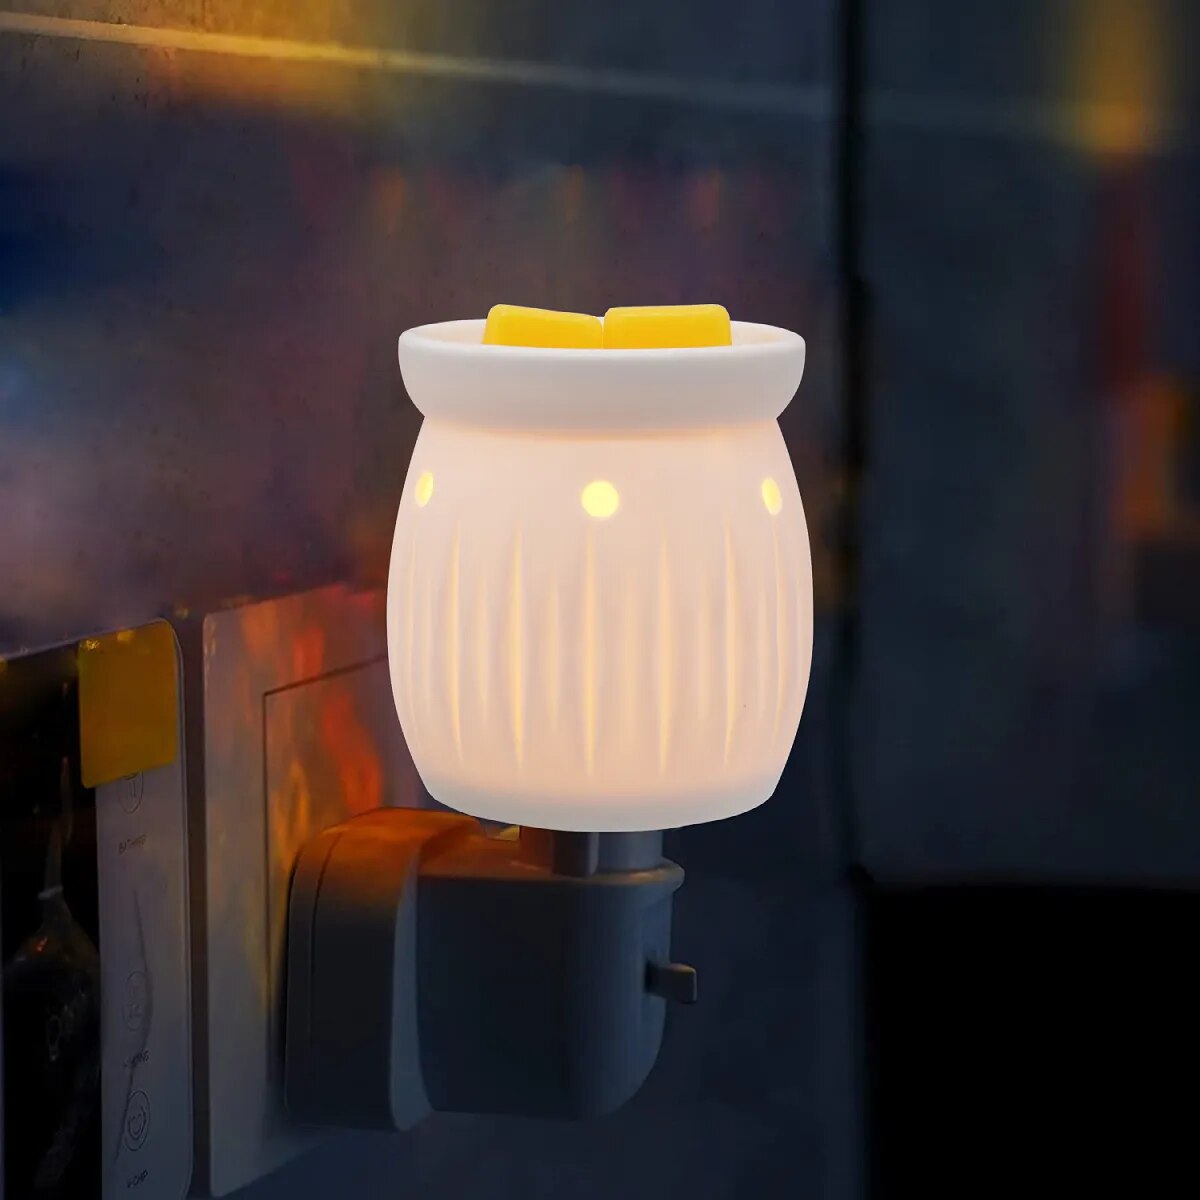 Ceramic Electric Wax Warmer Wax Melt Burner- Fragrance Wax Cube Melter- Plug In Oil Burner For Home Office Decor Gift